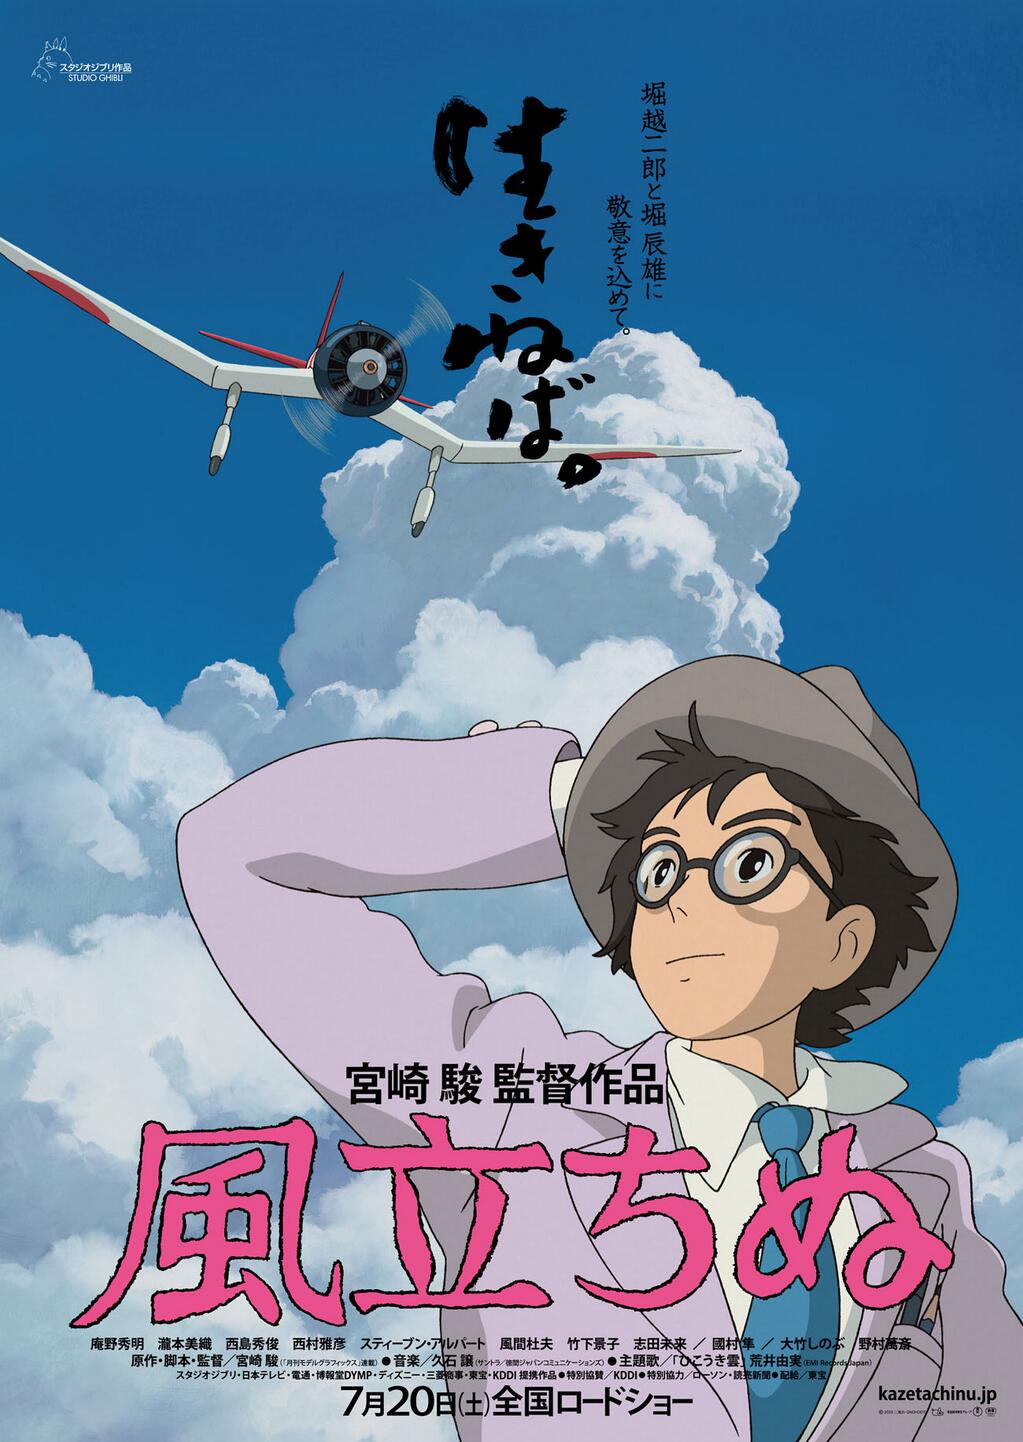 Un teaser du film The Wind Rises (Kaze tachinu) de Hayao Miyazaki